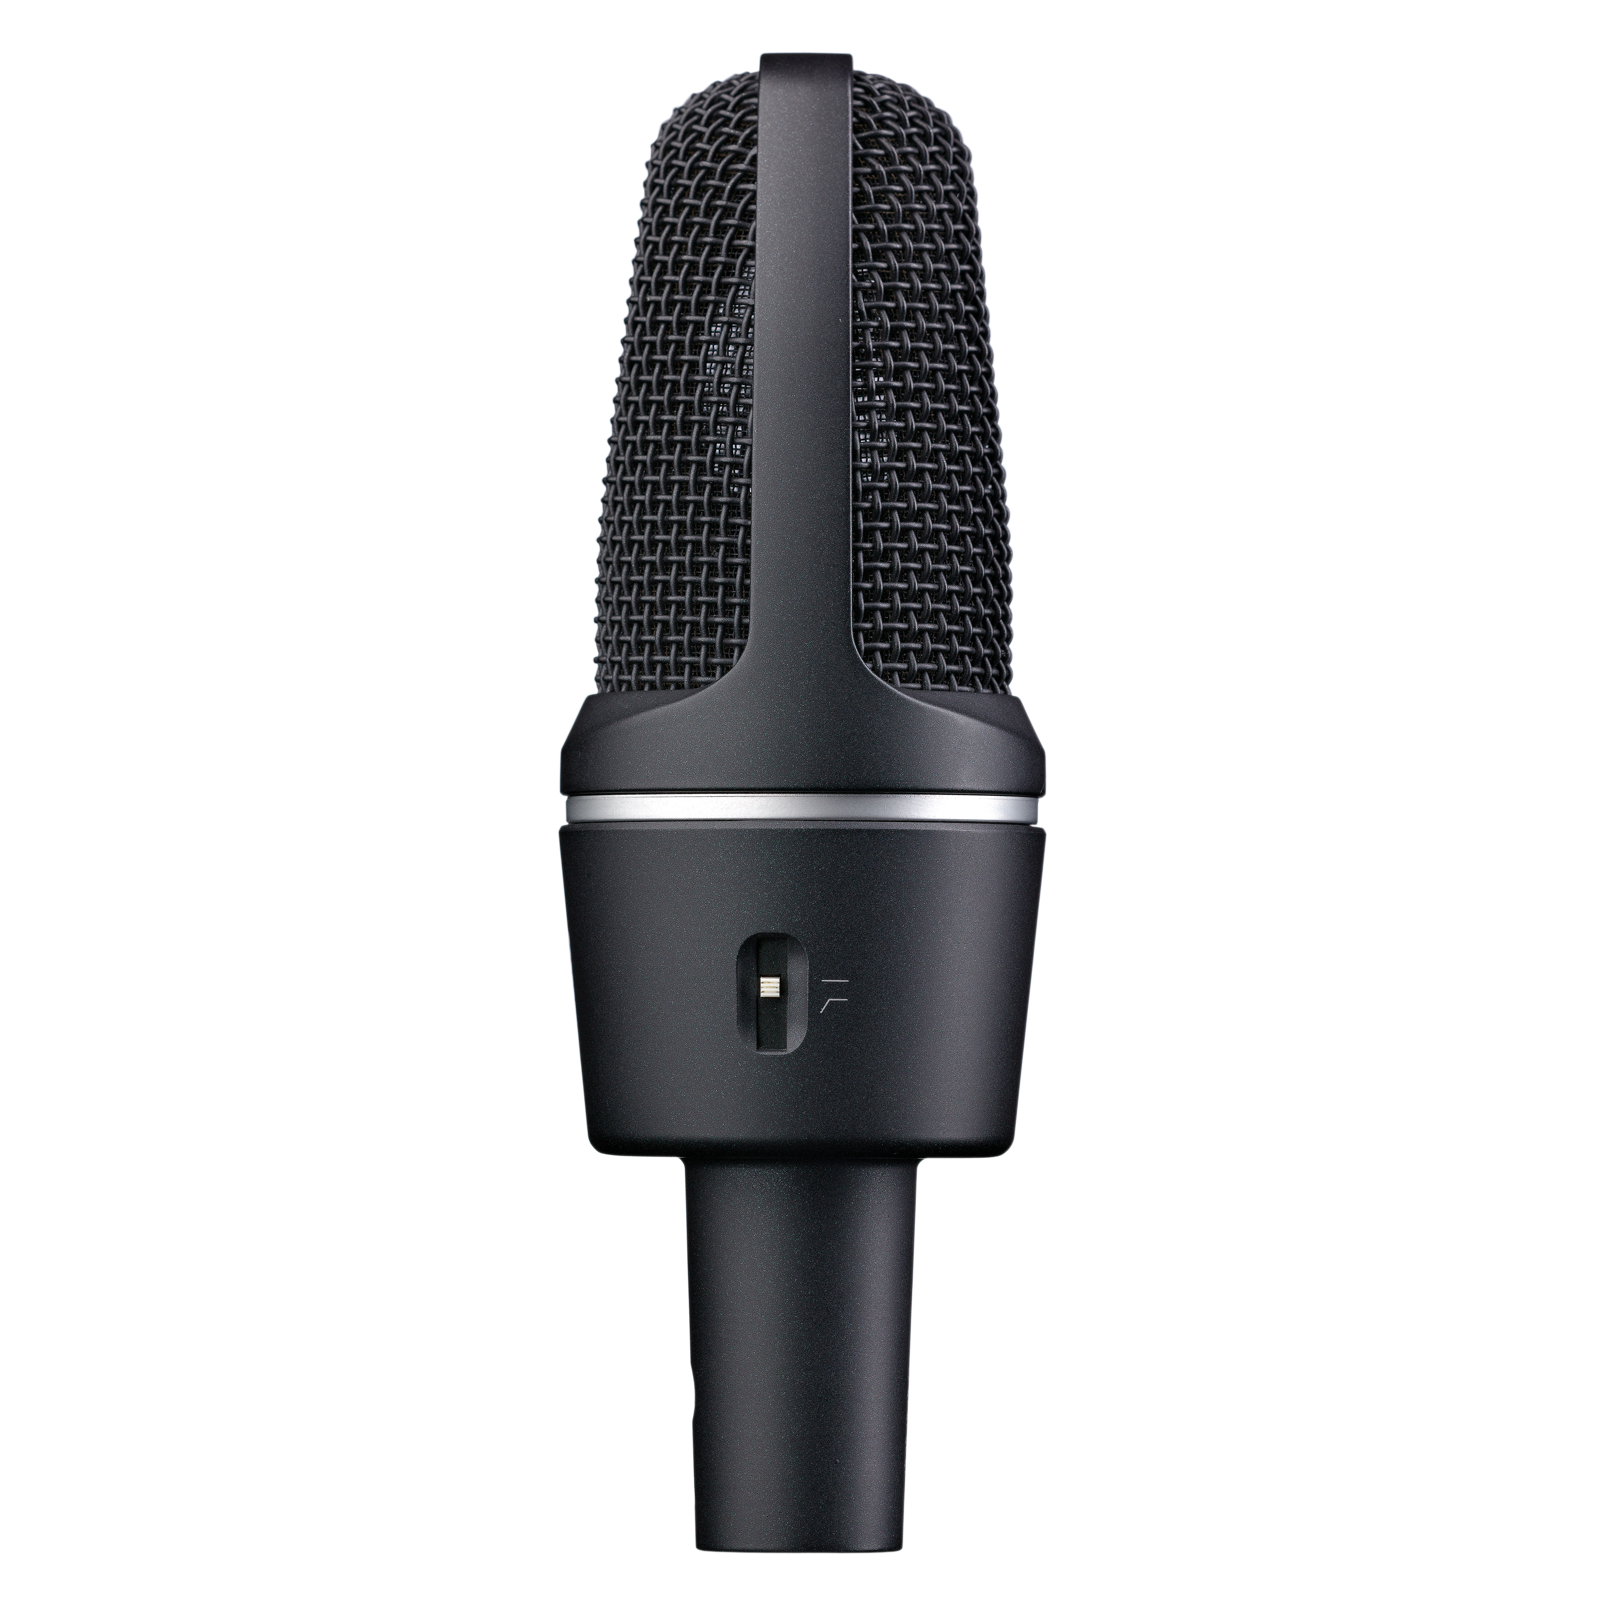 C3000 - Black - High-performance large-diaphragm condenser microphone - Left